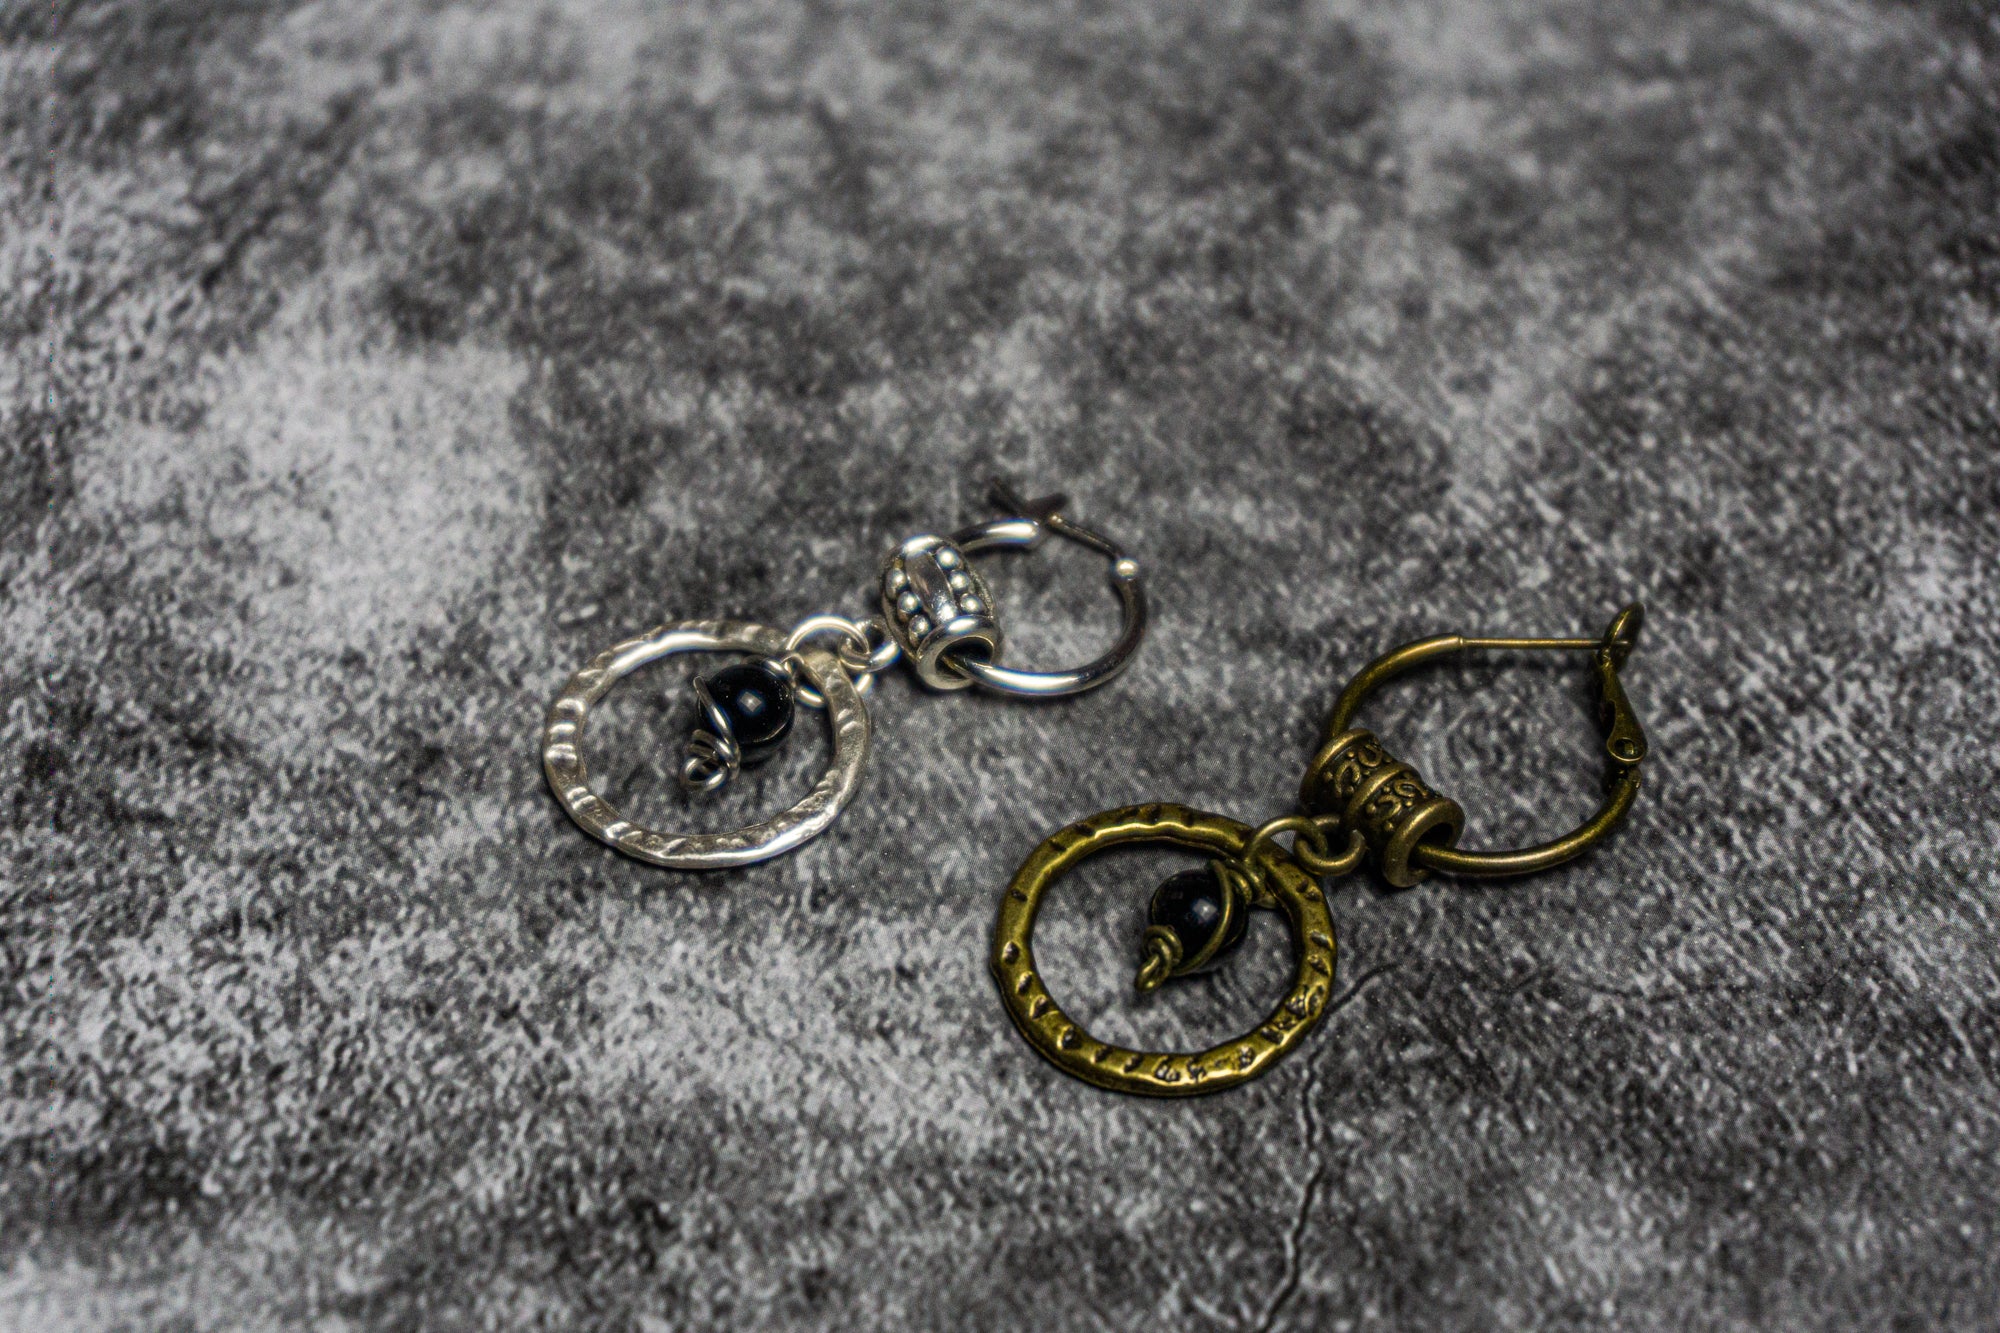 siver and bronze model hoop dangel earring with a black onyx gemstone pearlearring